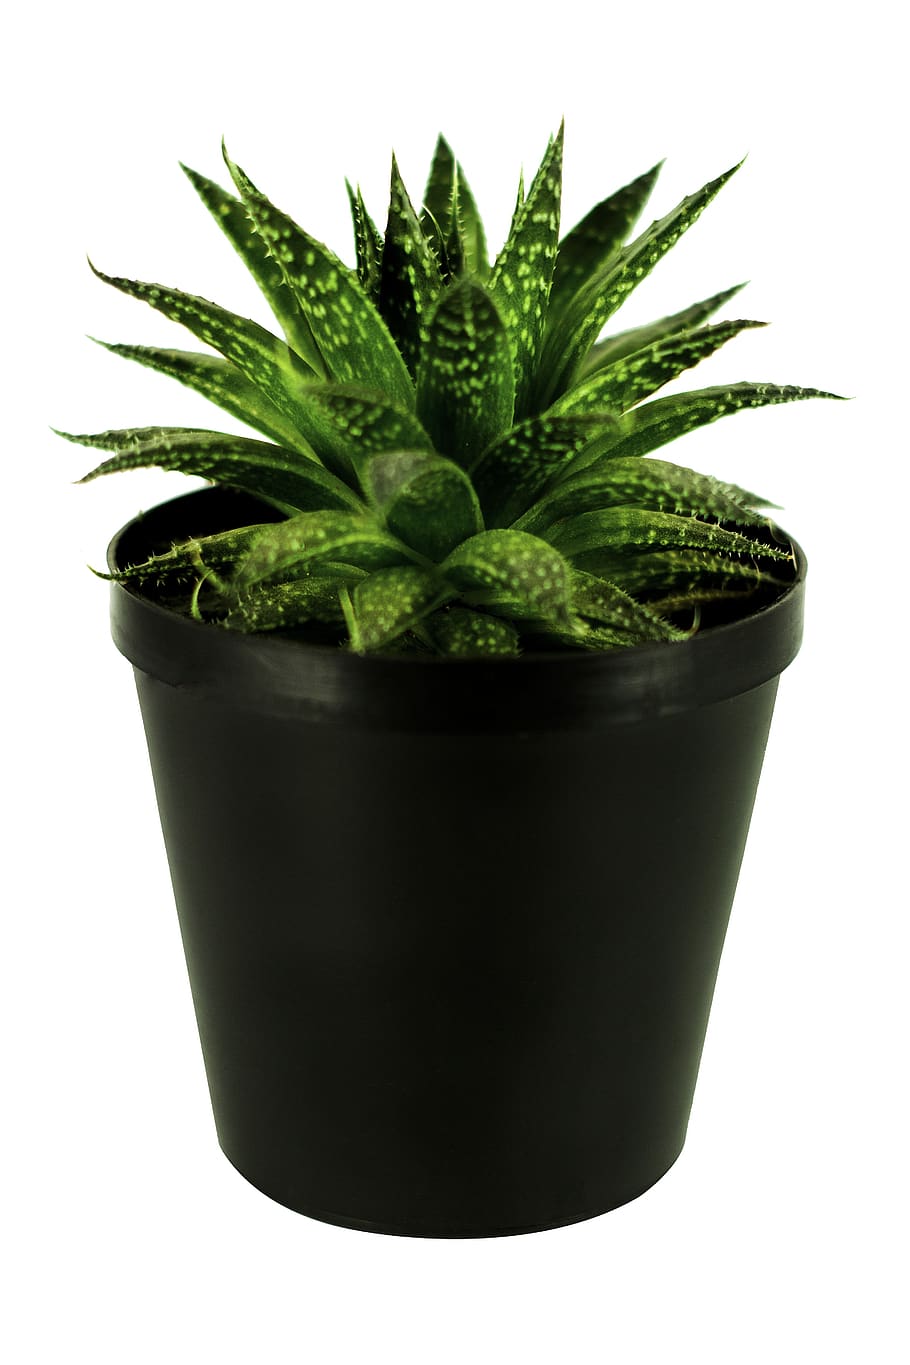 planta, verde, vaso, preto, fundo branco, foto de estúdio, cor verde, planta em vaso, cortar, crescimento